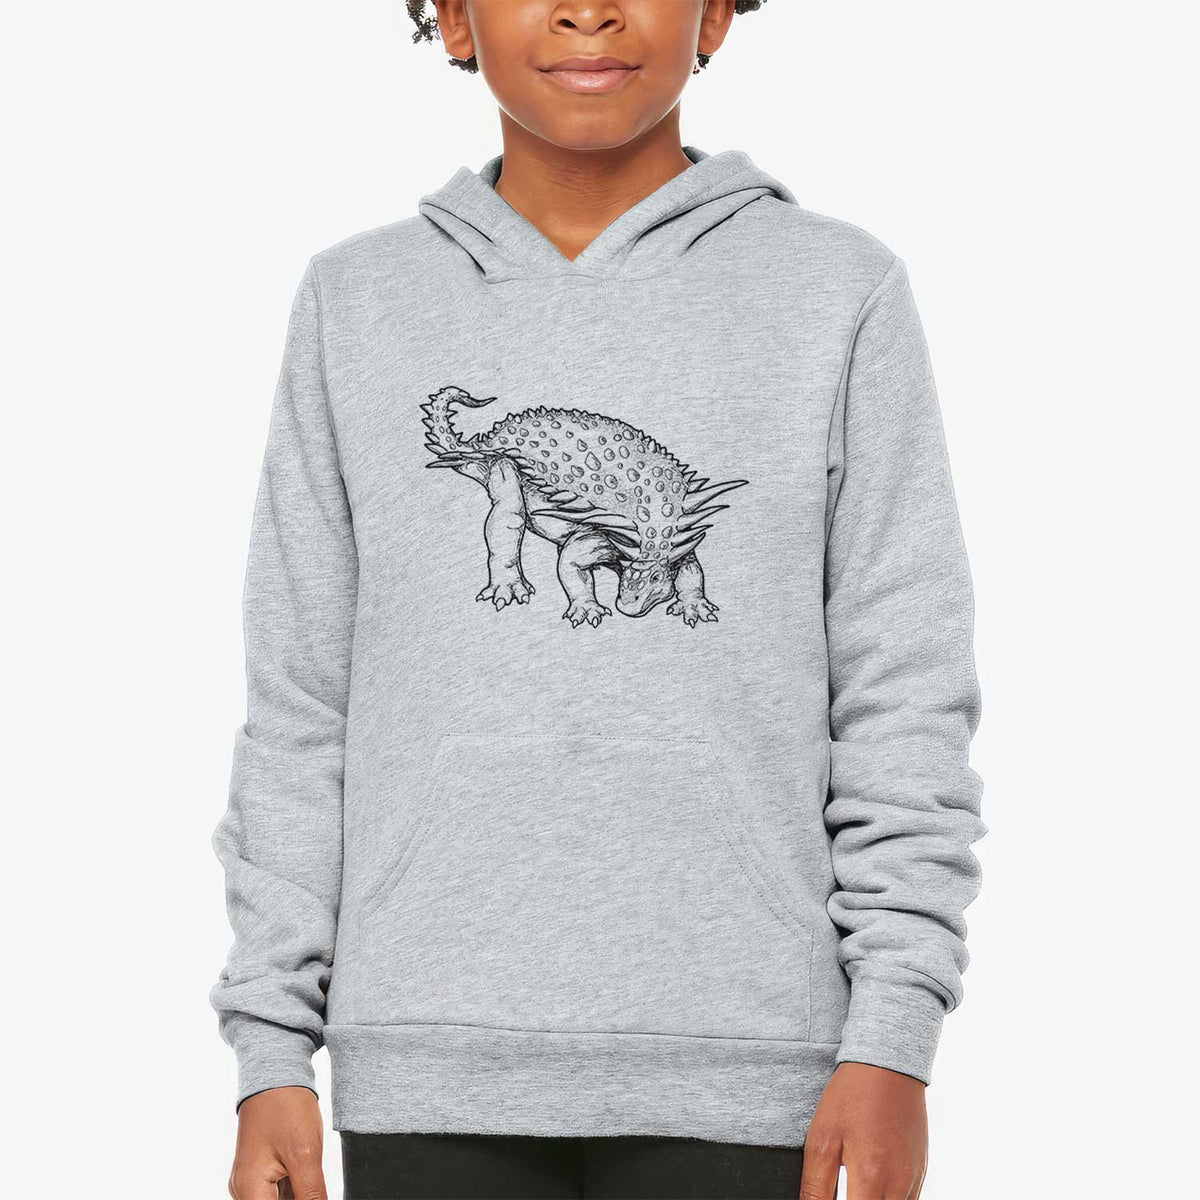 Nodosaurus Textilis - Youth Hoodie Sweatshirt